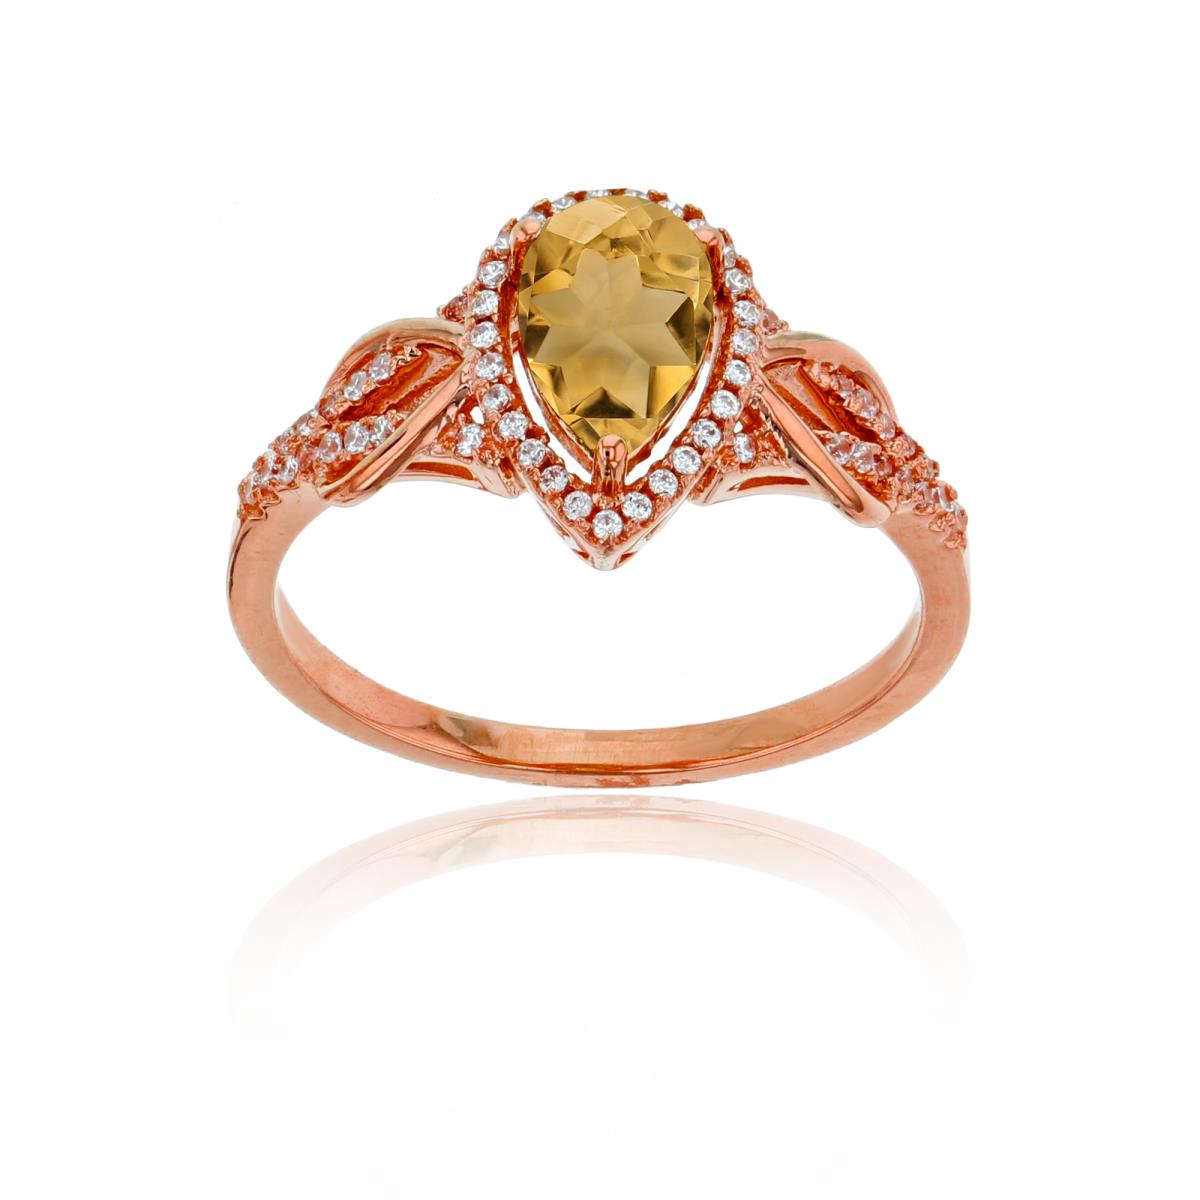 14K Rose Gold 0.17CTTW Rnd Diamond & 8x5mm Pear Cut Citrine Knot Sides Ring